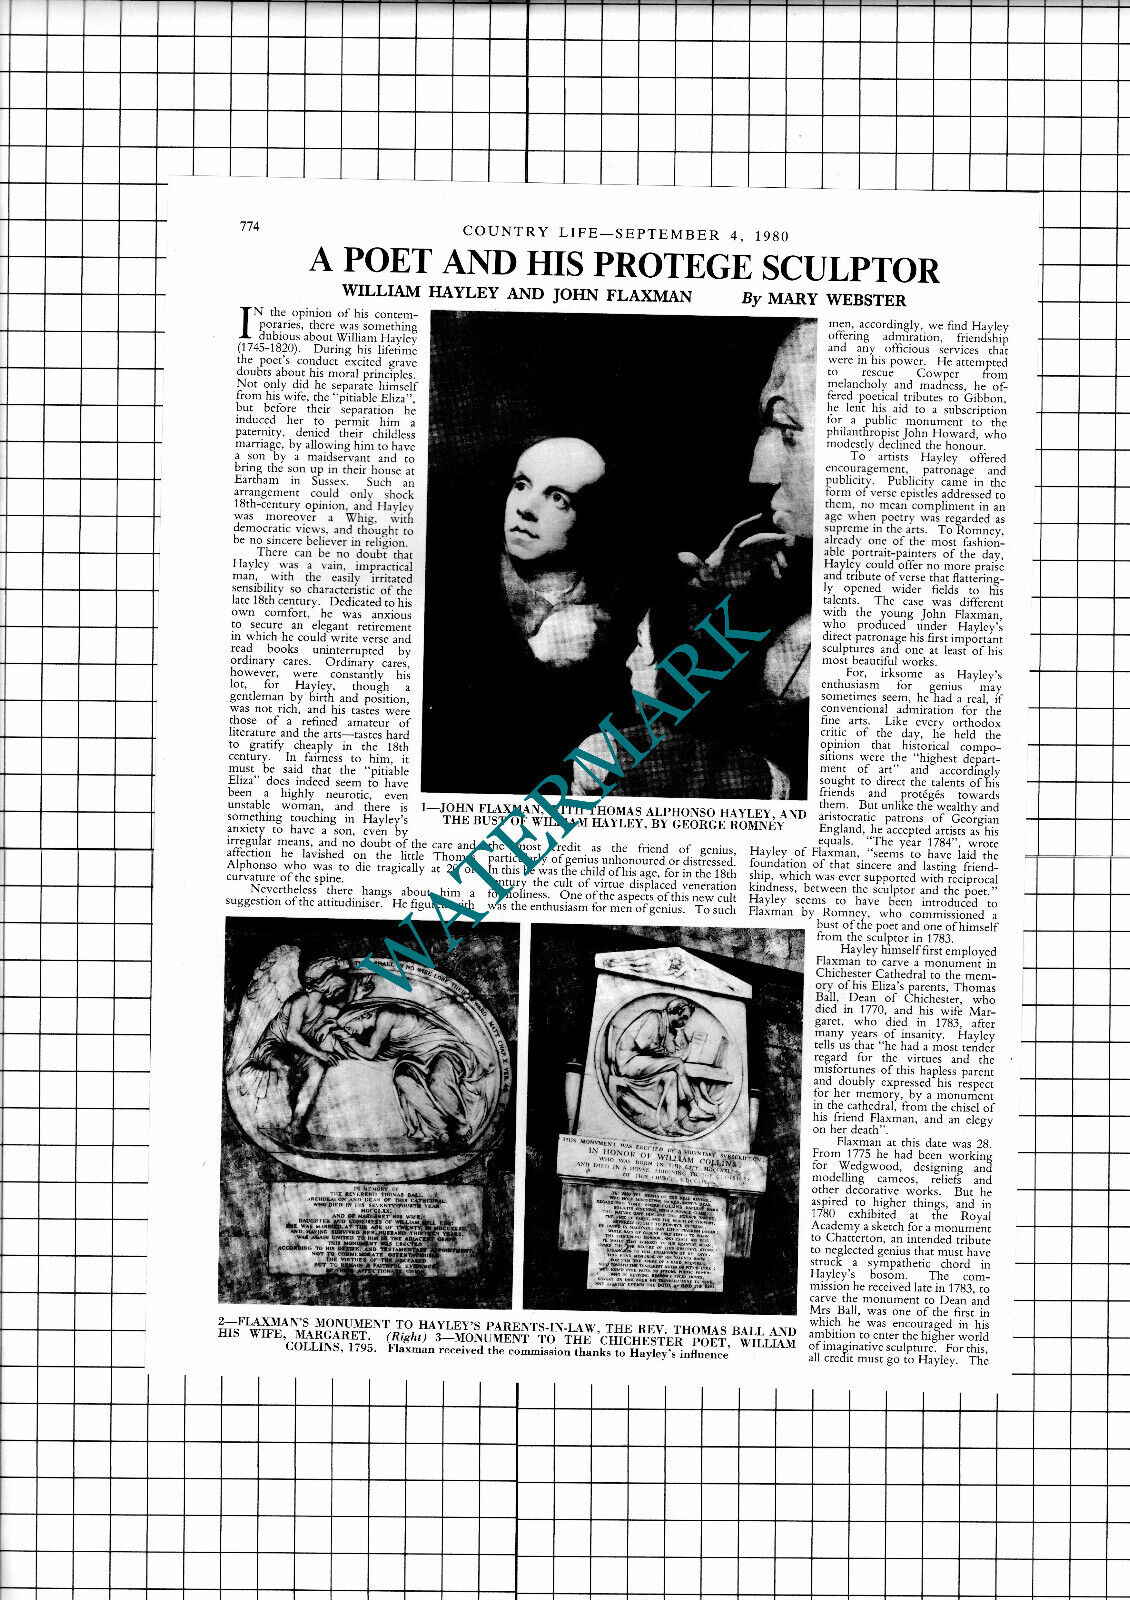 William Hayley Poet  and John Flaxman  Sculptor  - 1980 Article / Print